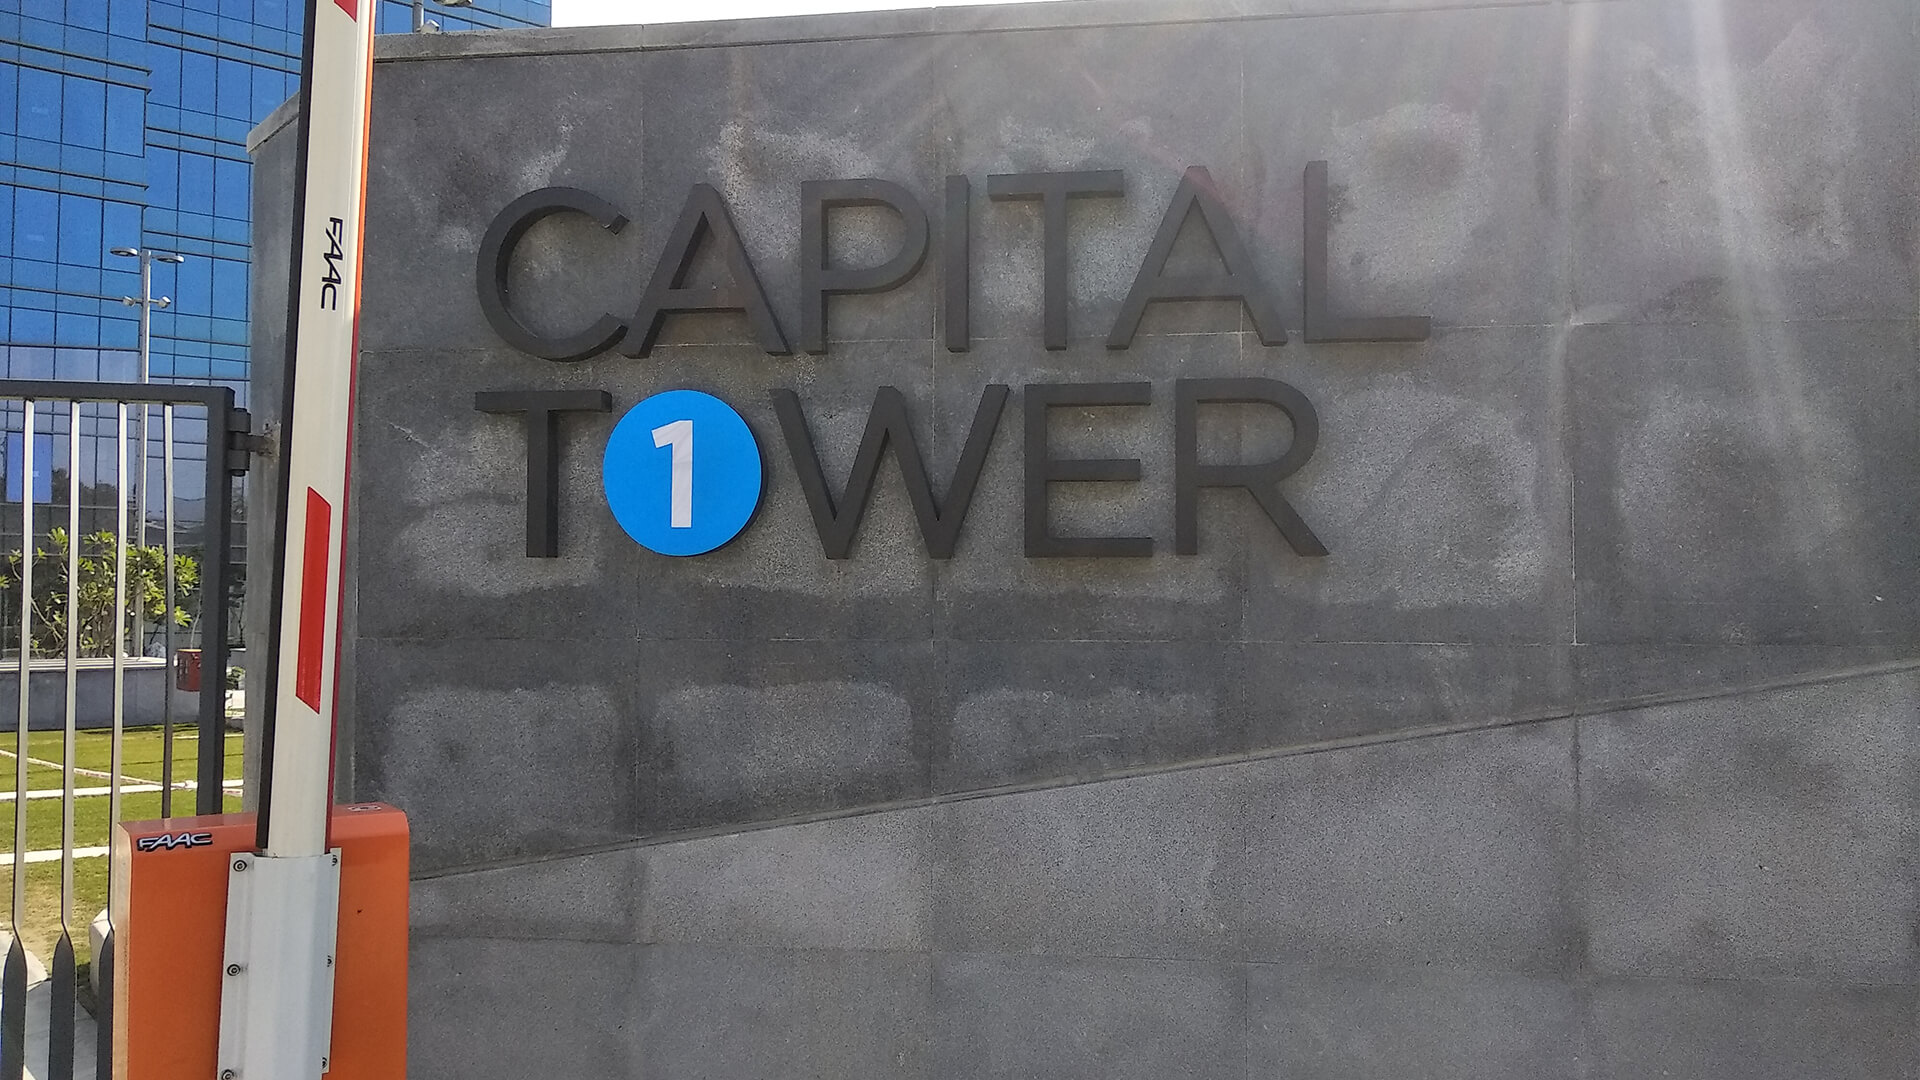 capital-towers-15